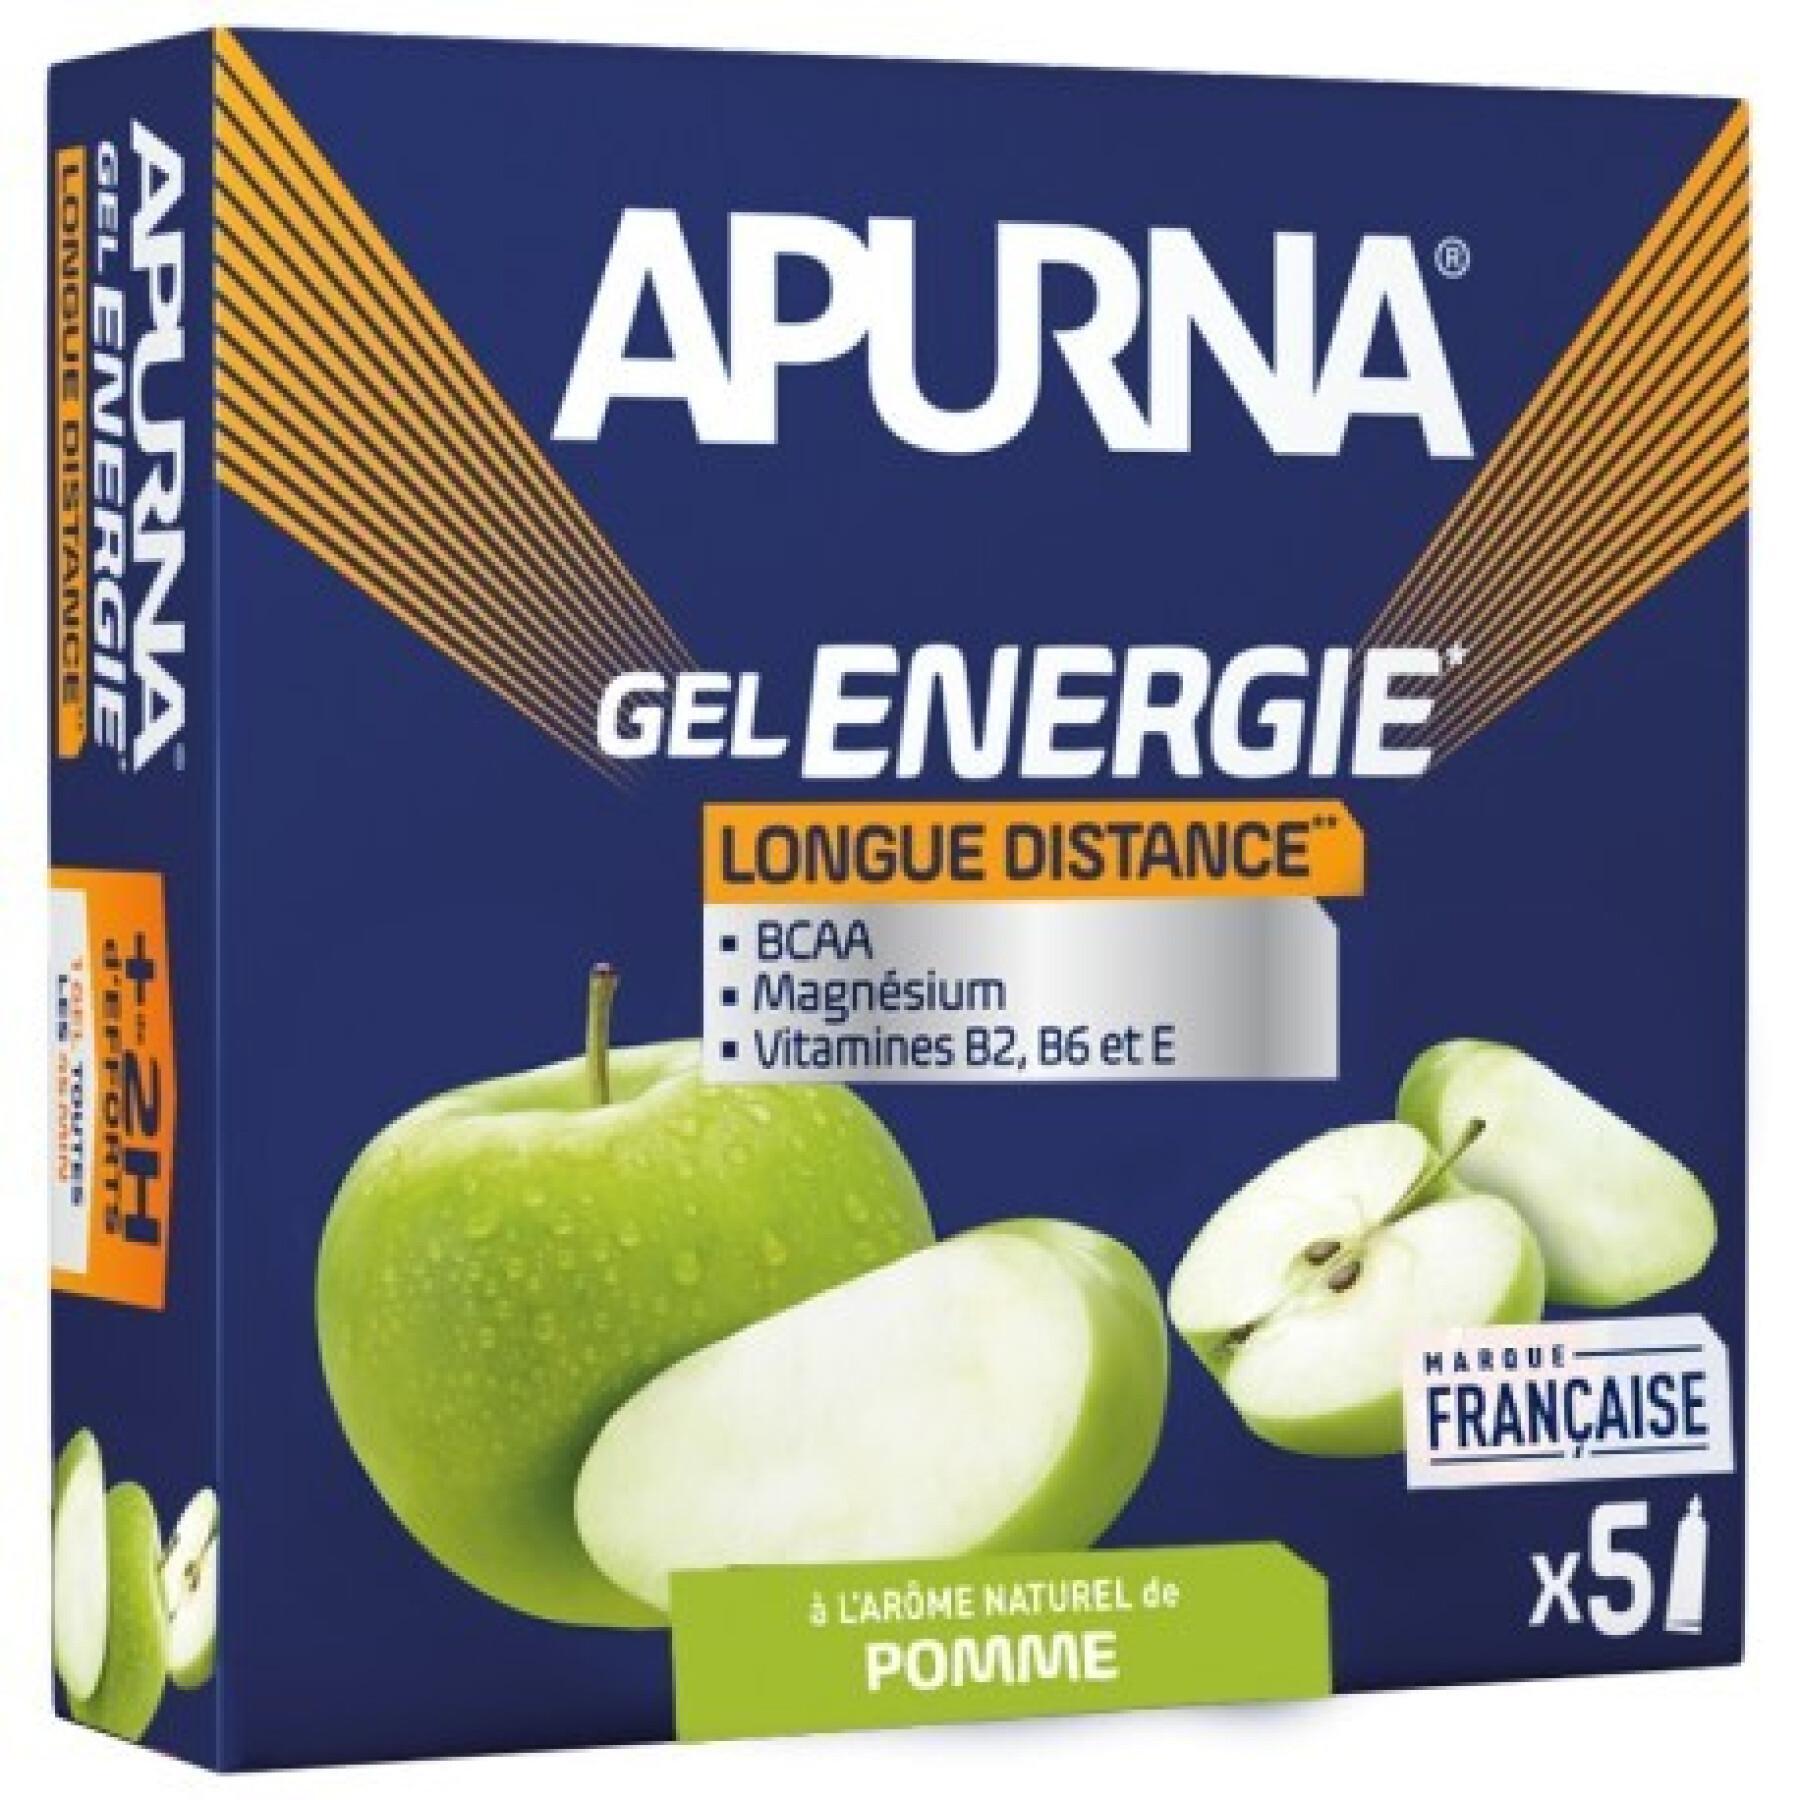 Set van 5 lange afstand energiegels groene appel +2u inspanning Apurna